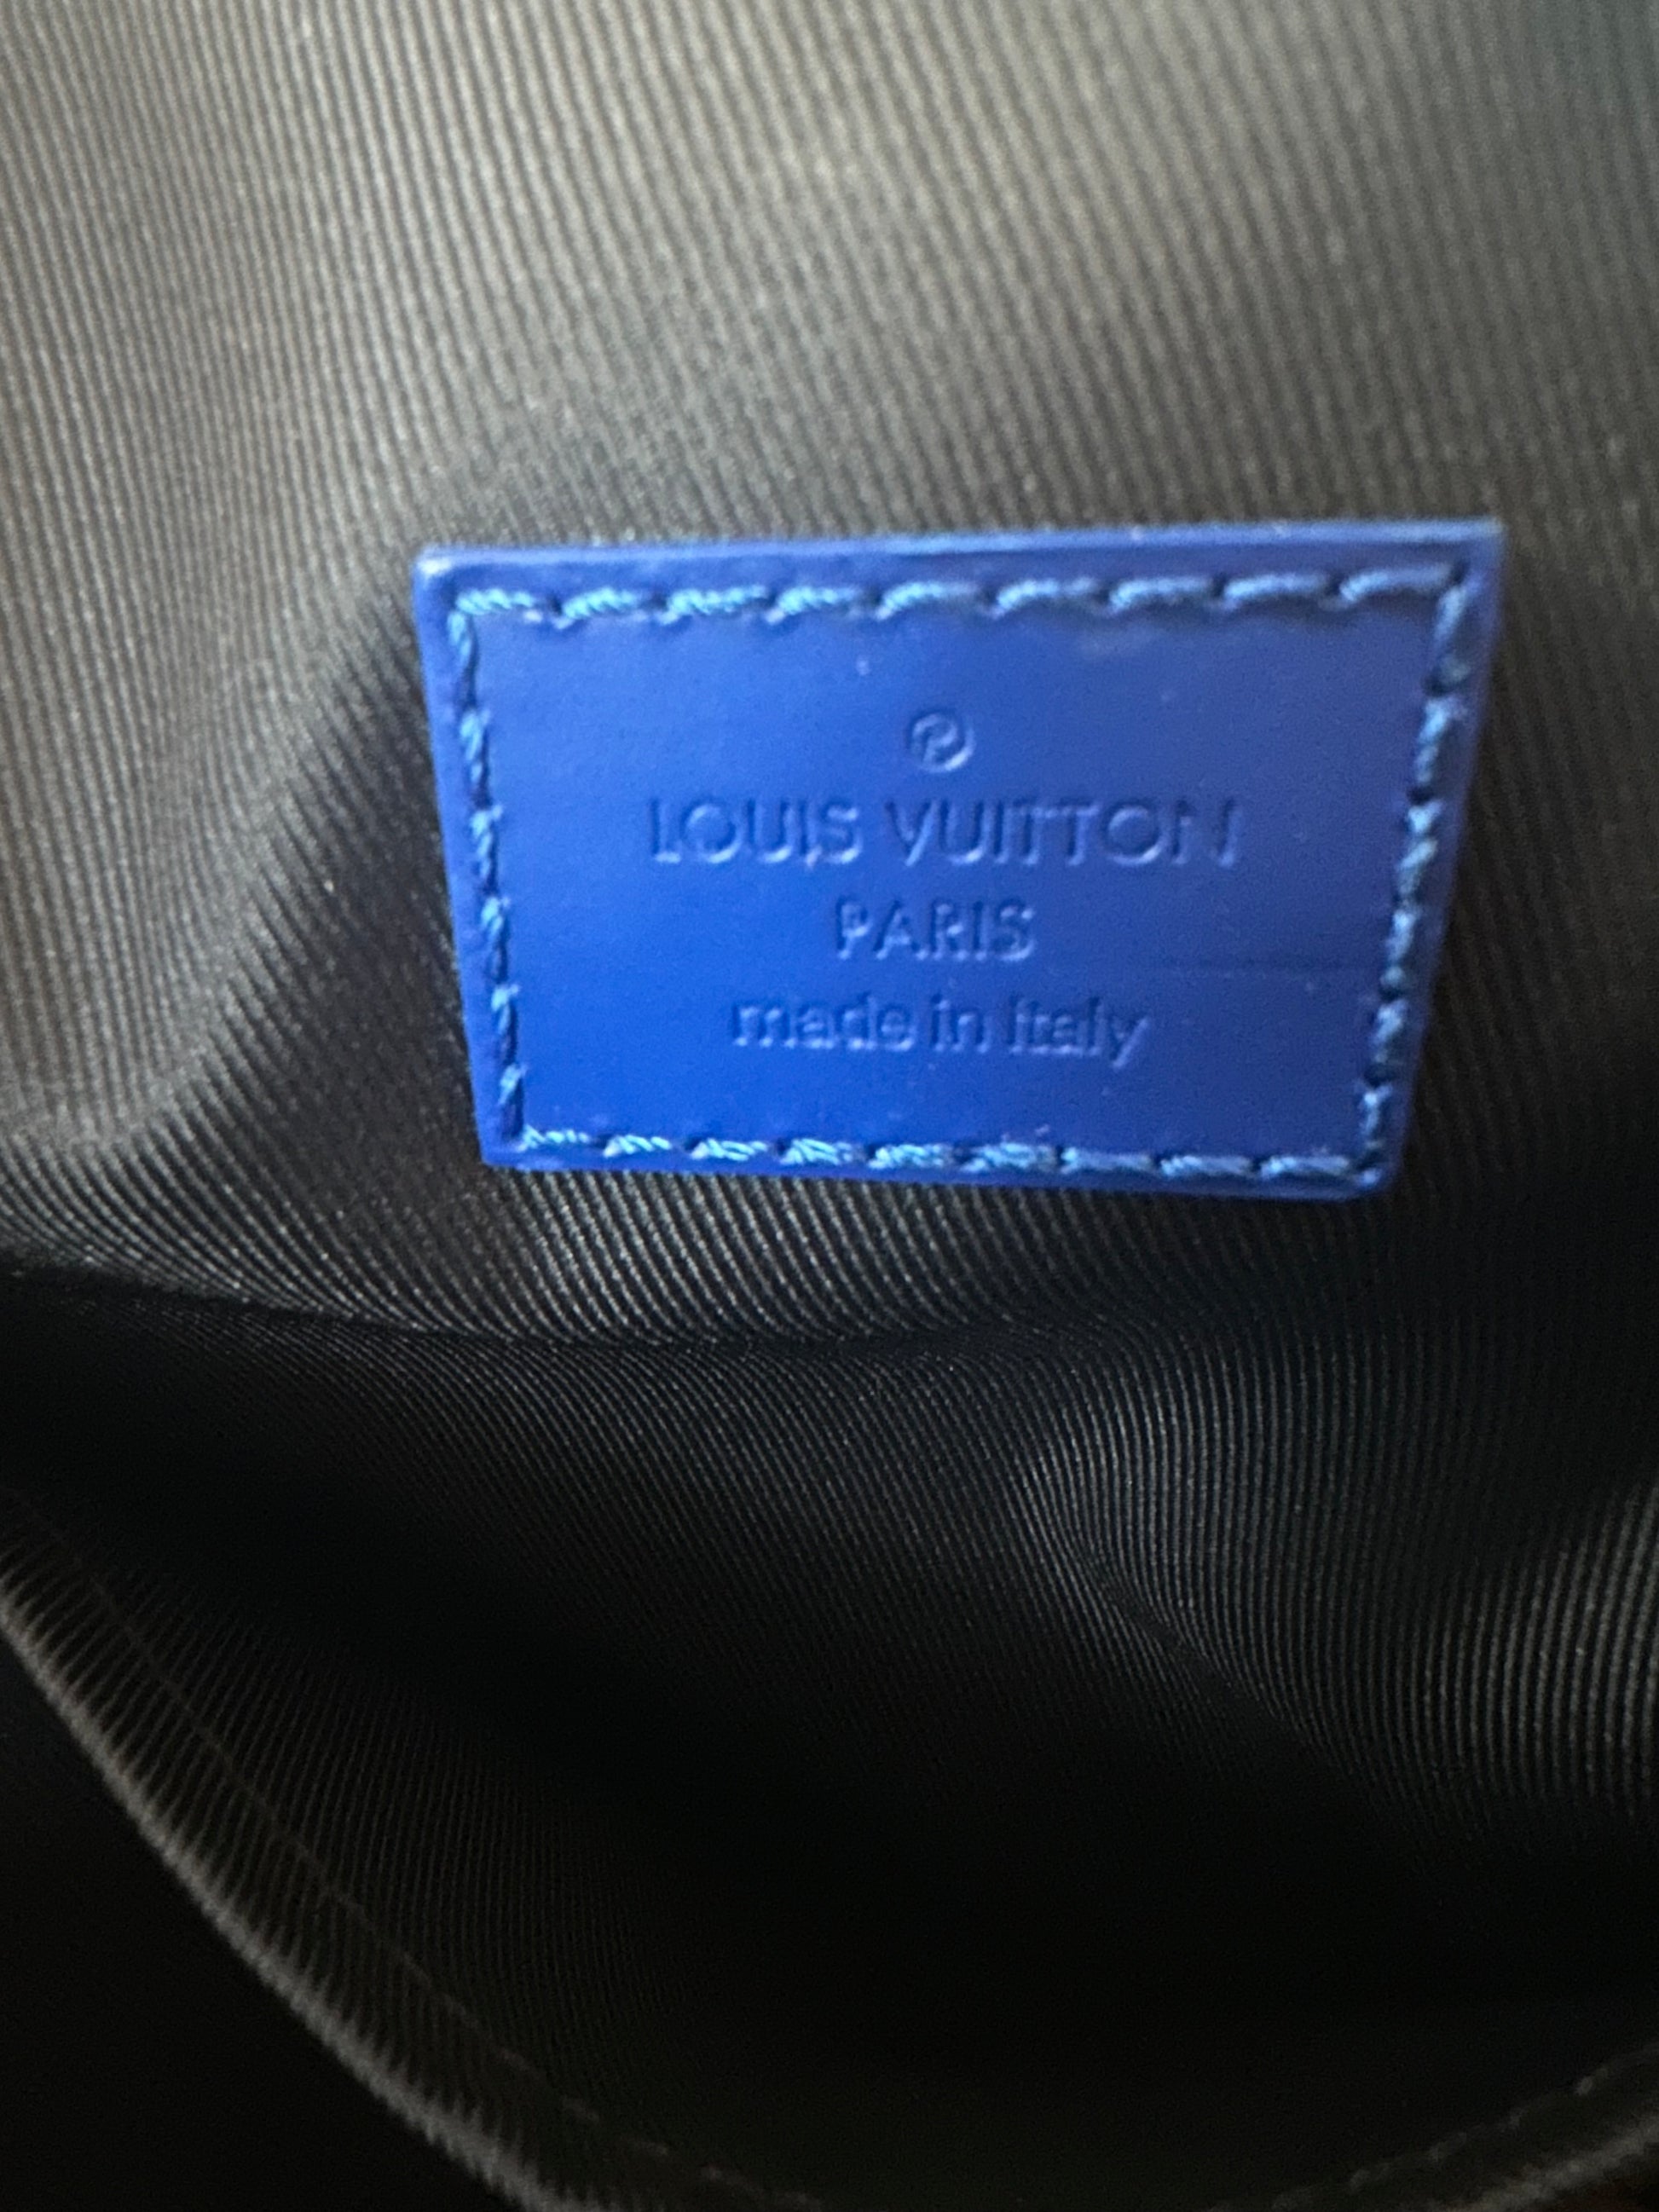 Bag > Louis Vuitton Dean Backpack